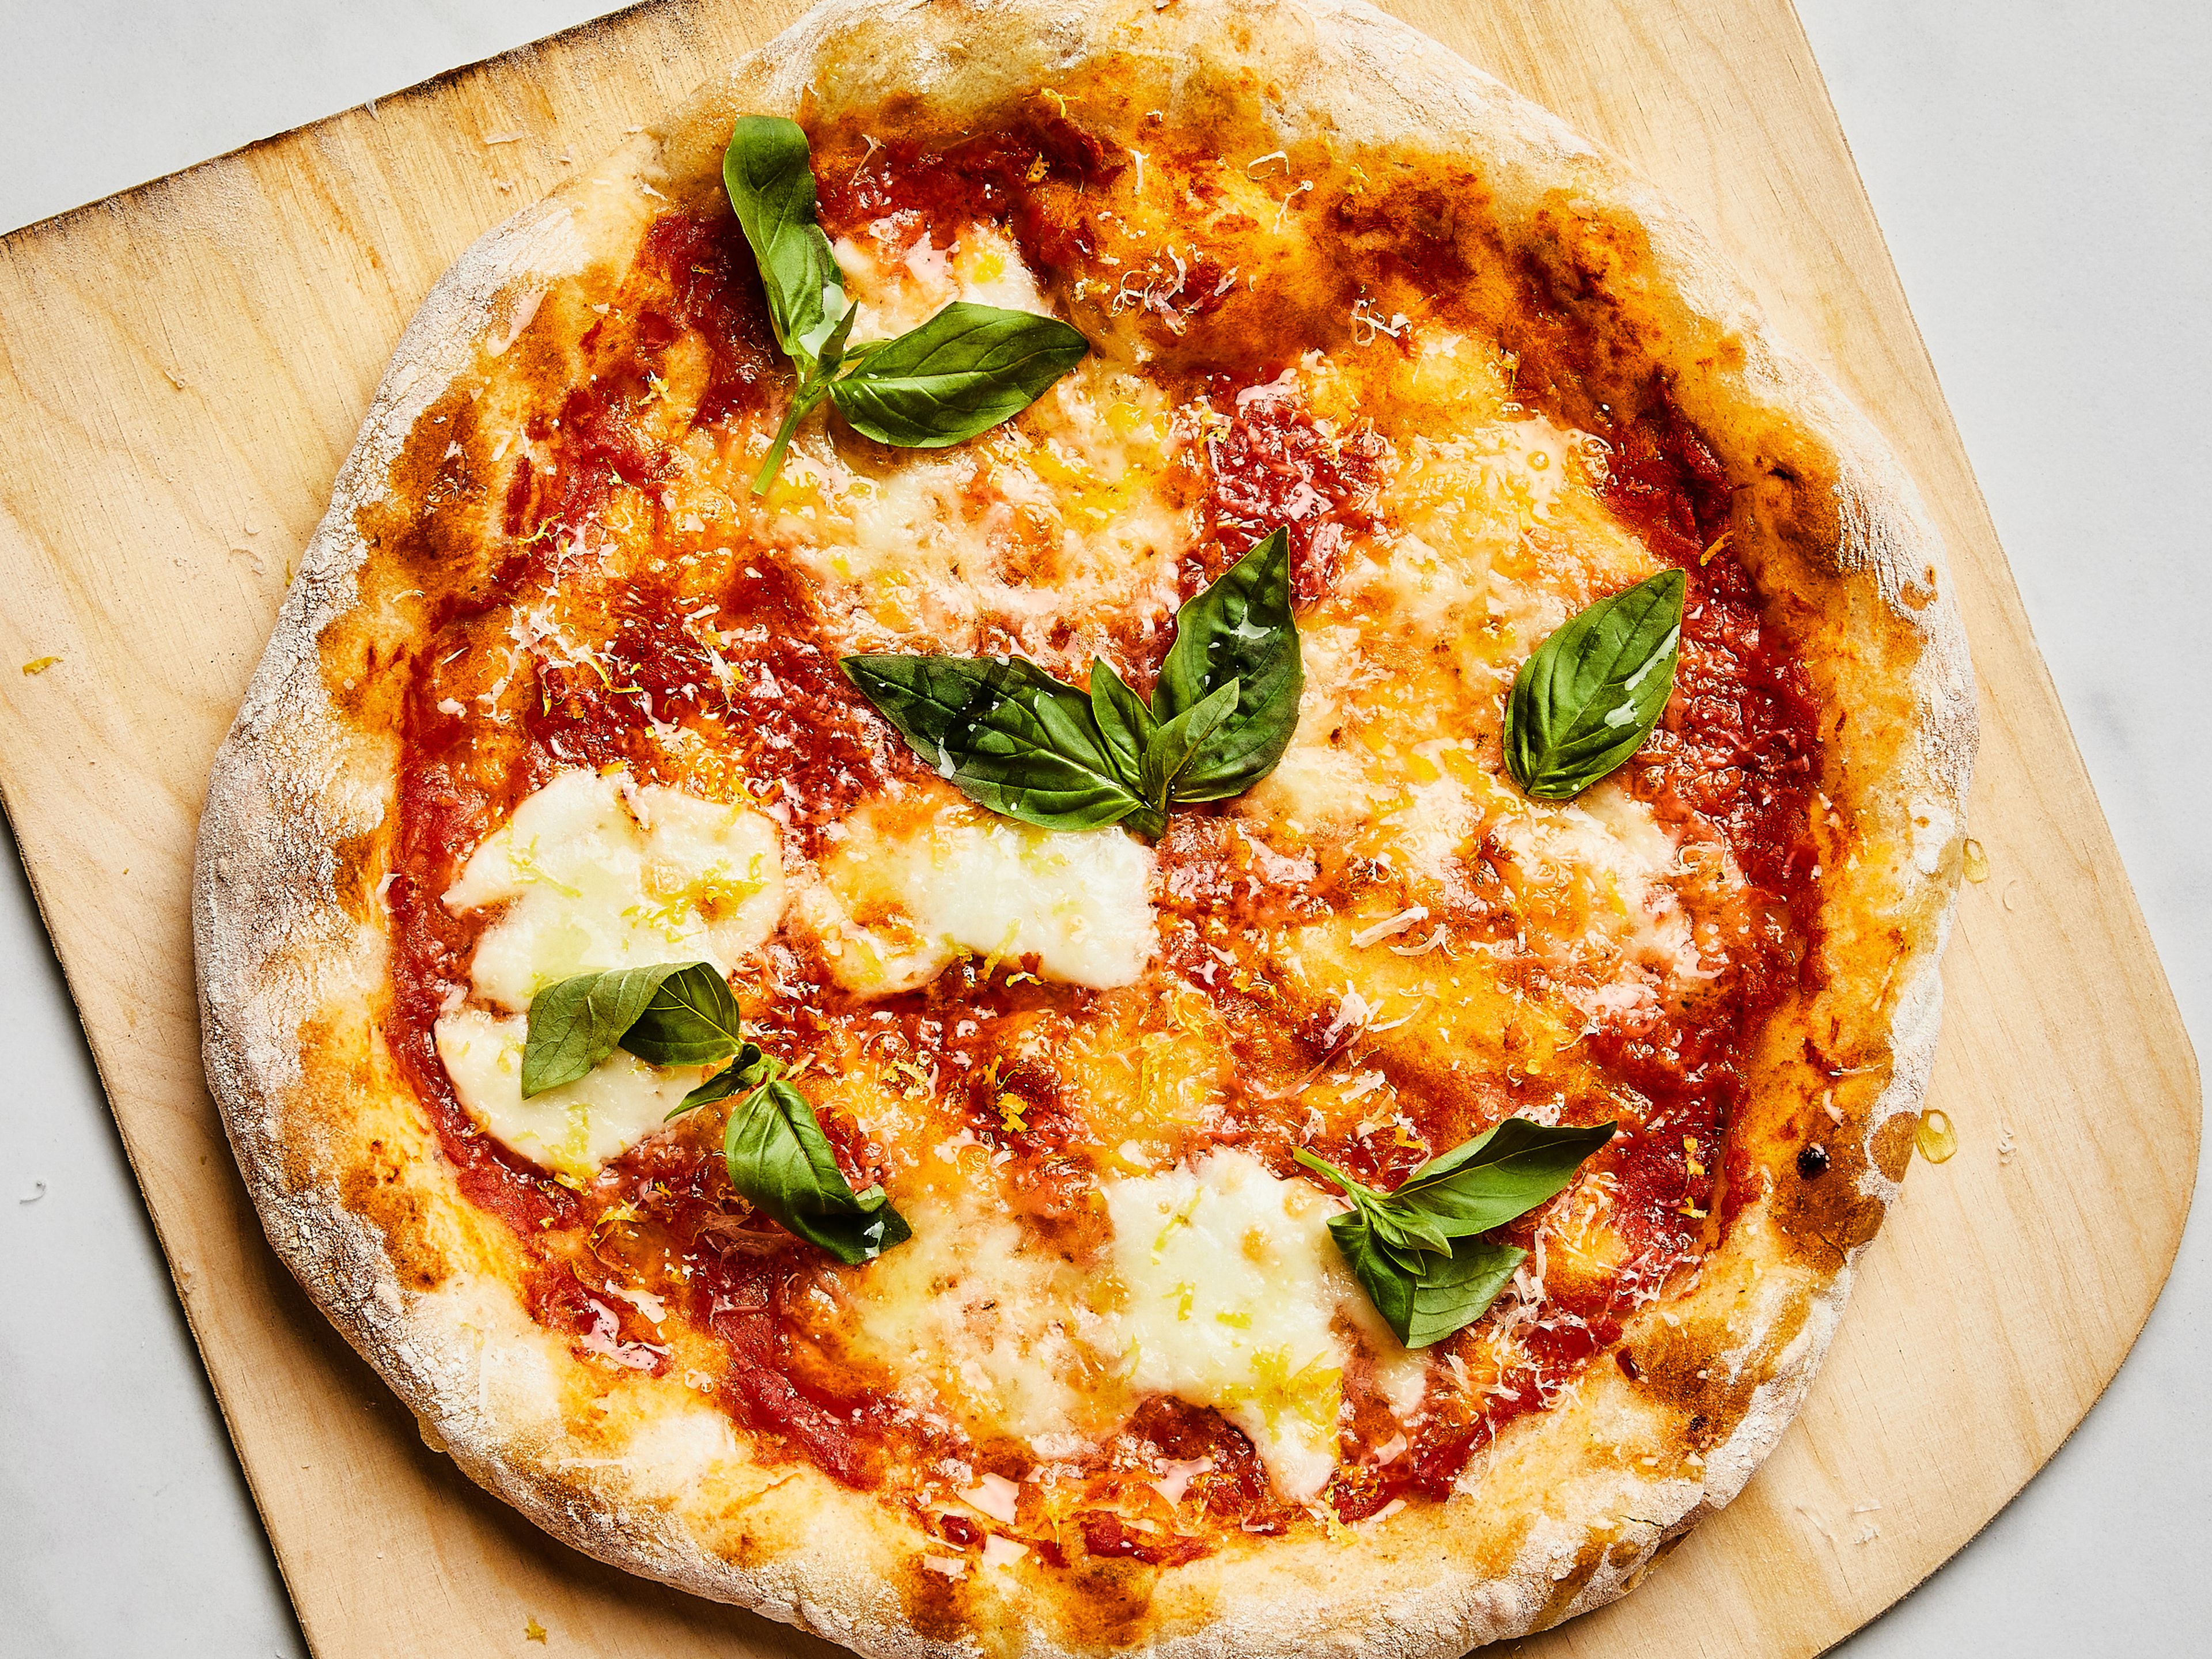 Neapolitan-style pizza with Lisa